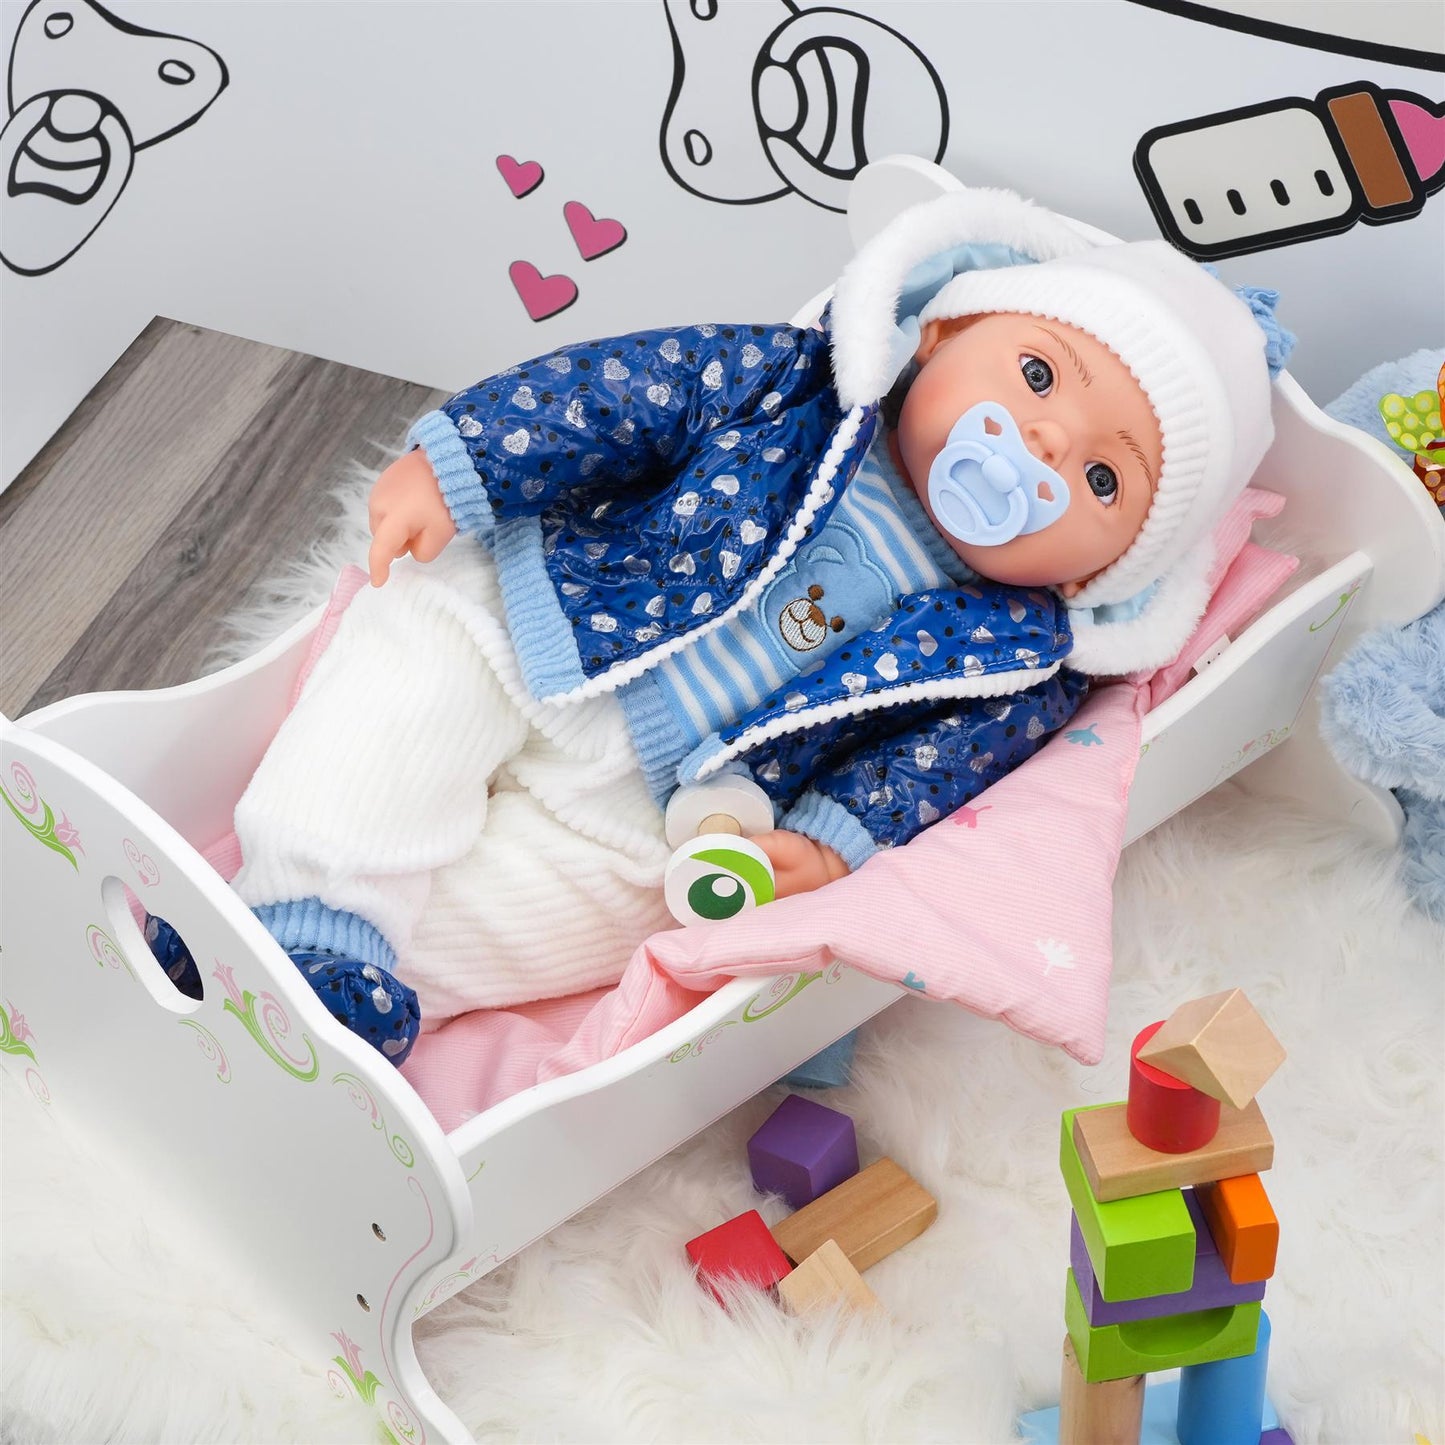 Blue Bibi Baby Doll Toy With Dummy & Sounds by BiBi Doll - UKBuyZone